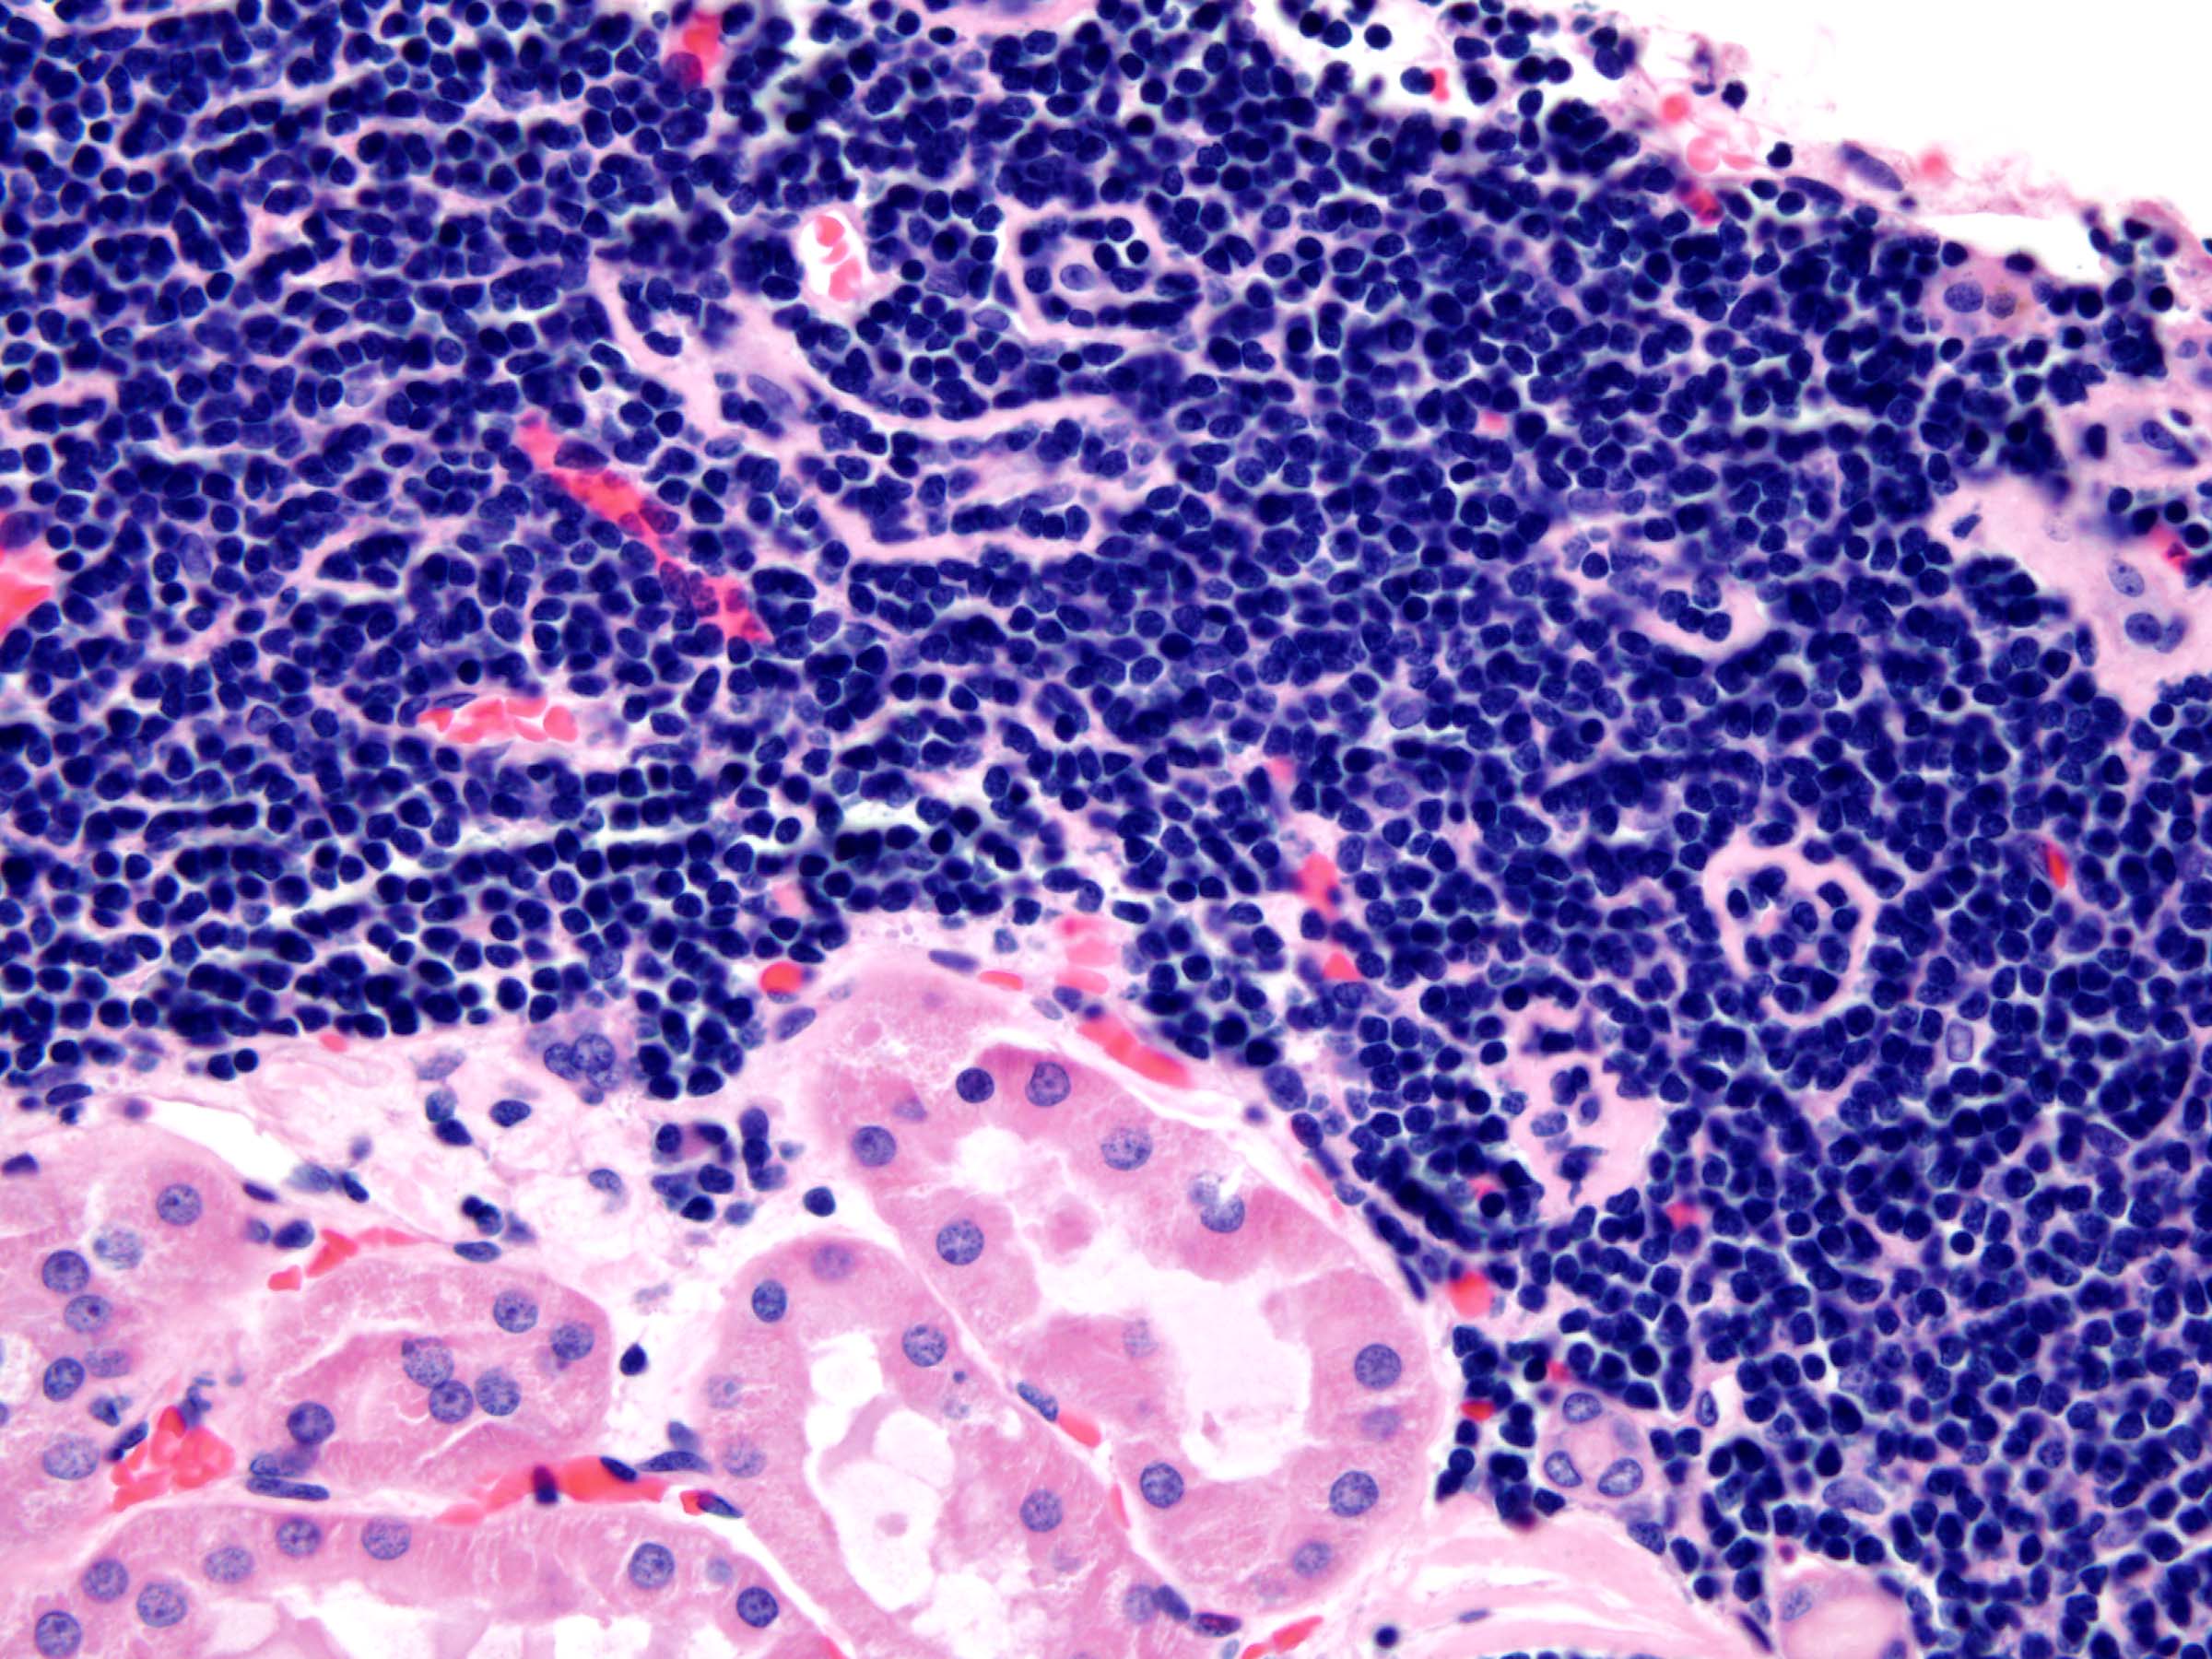 Monotonous dense small lymphocytes